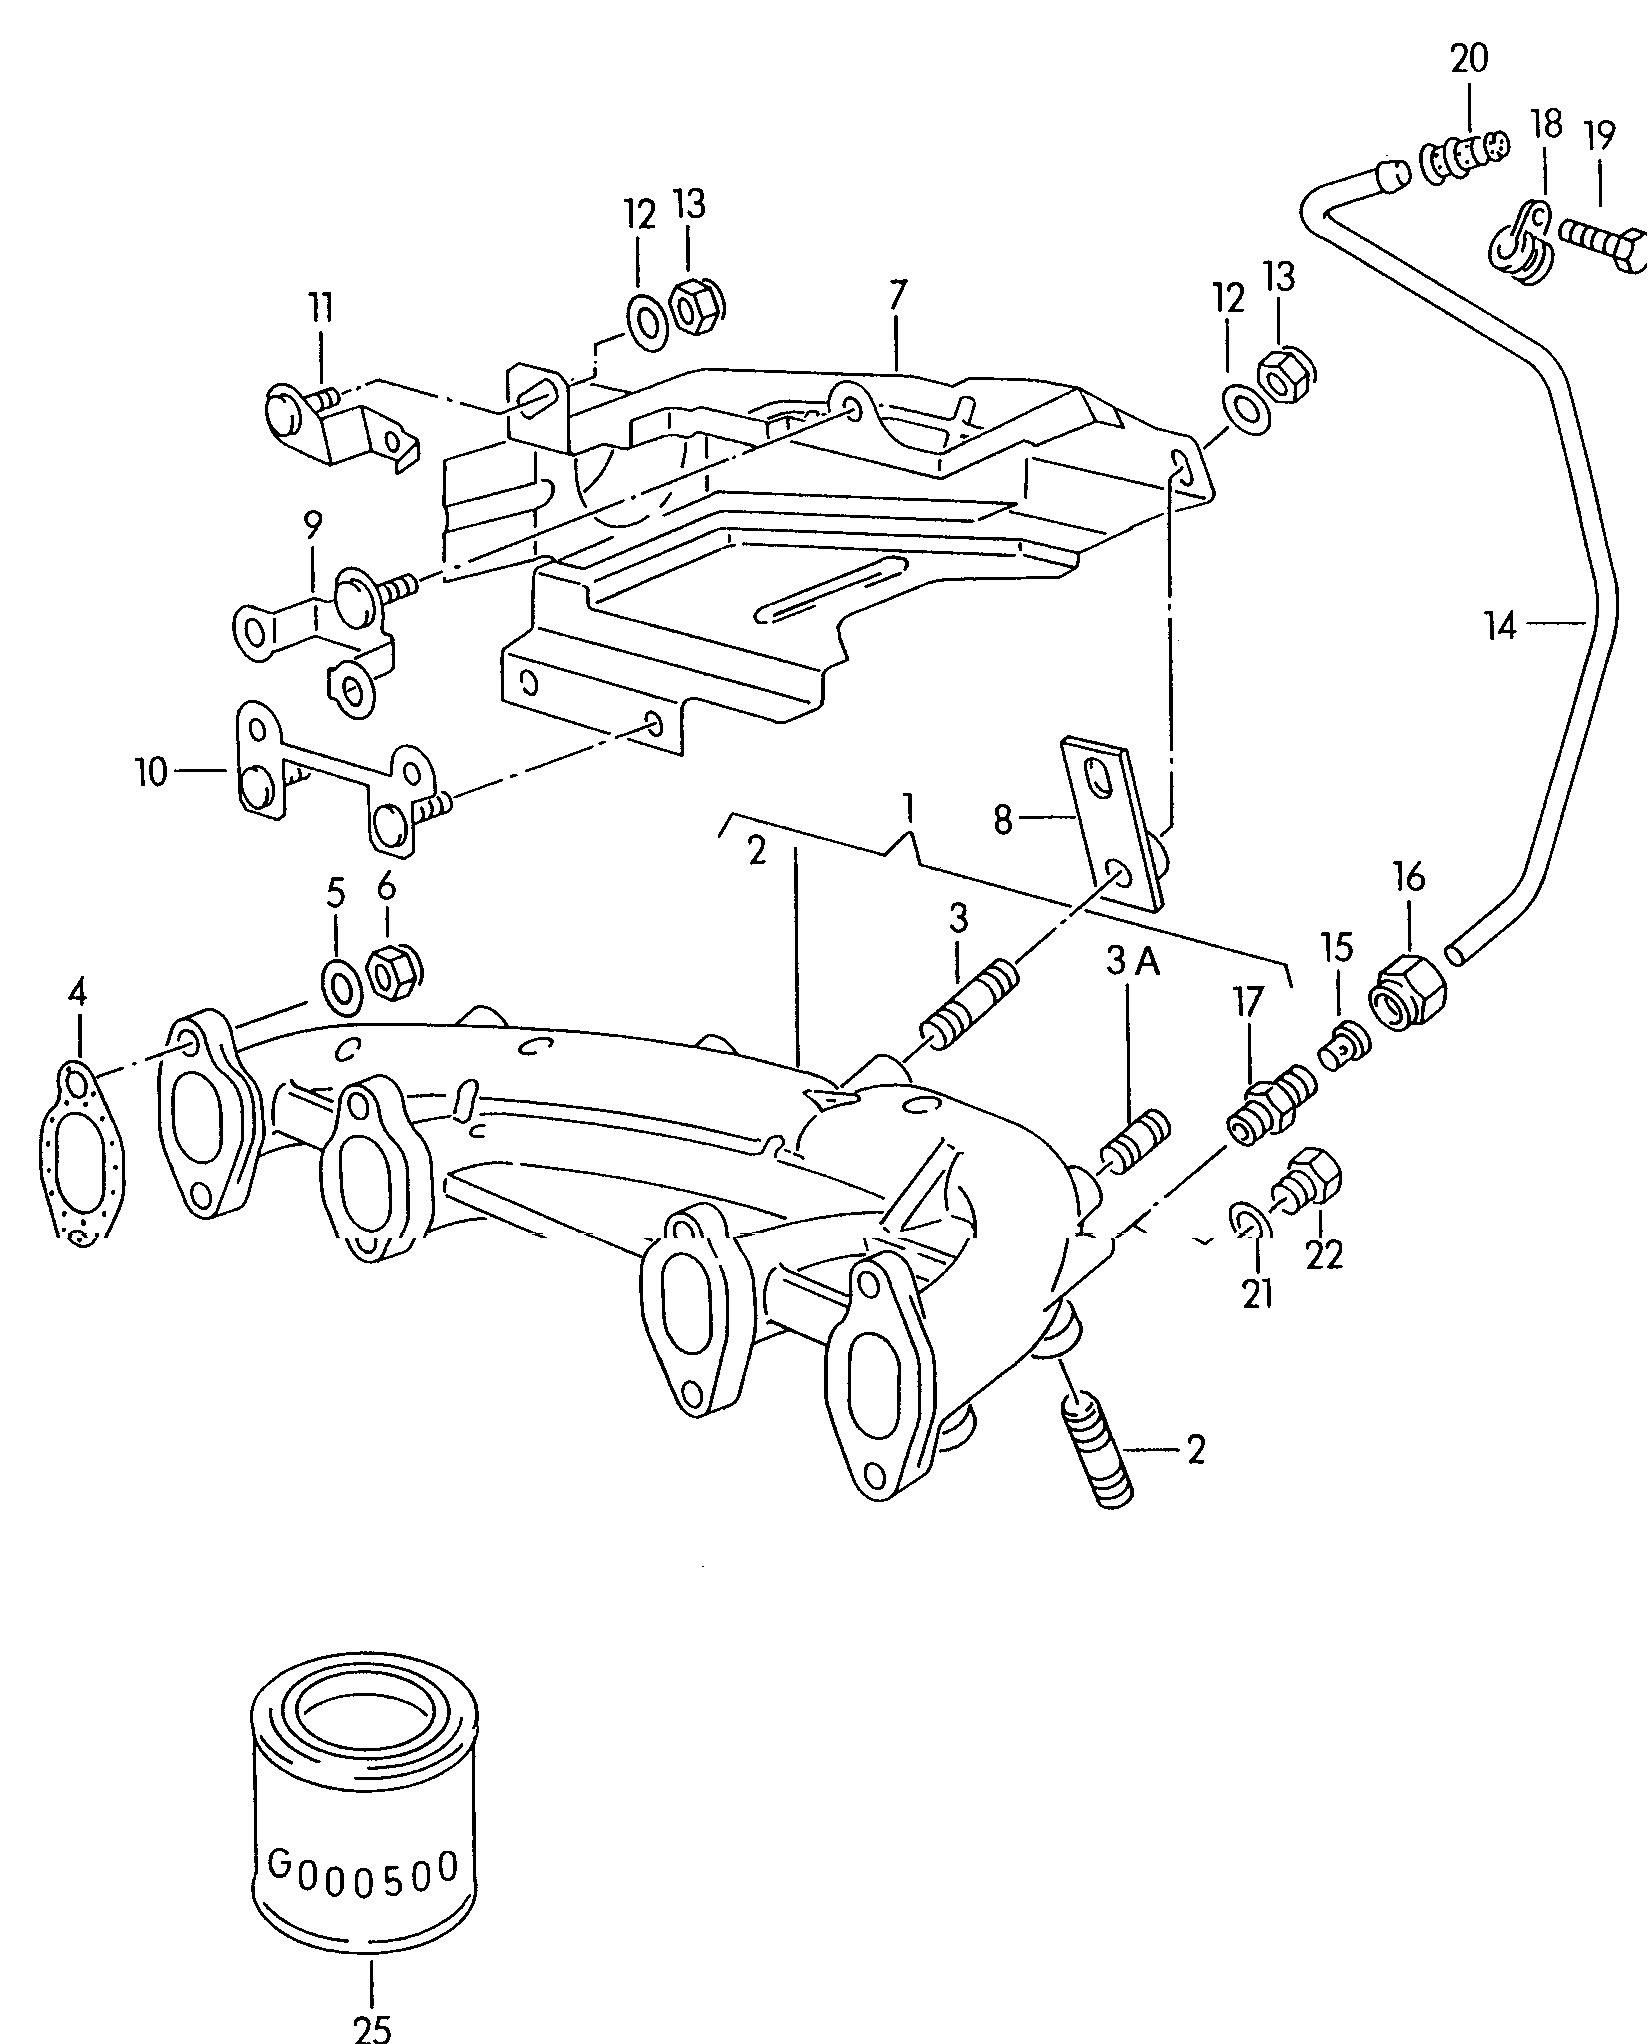 Kolektor wydechowy 2,0 l - Corrado - cor